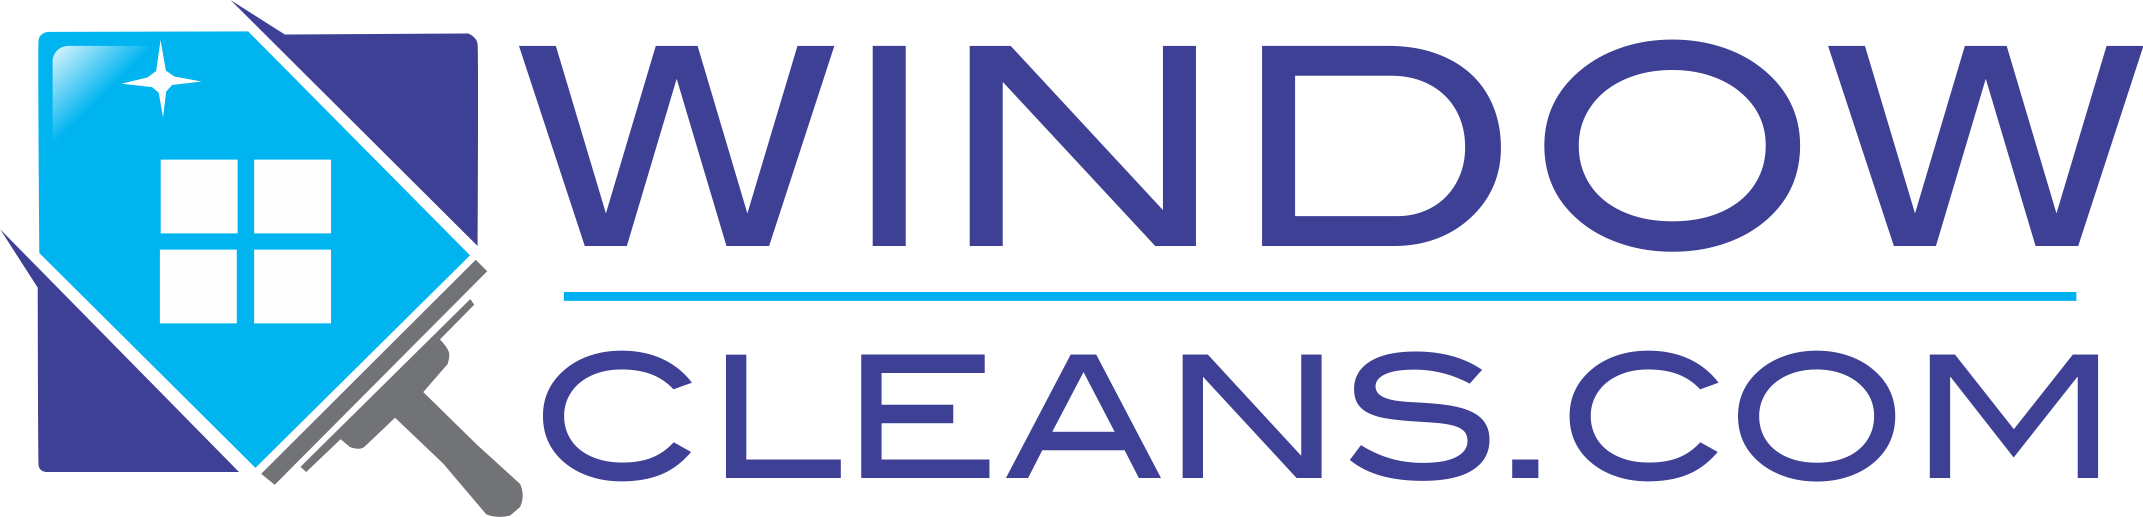 window-logo